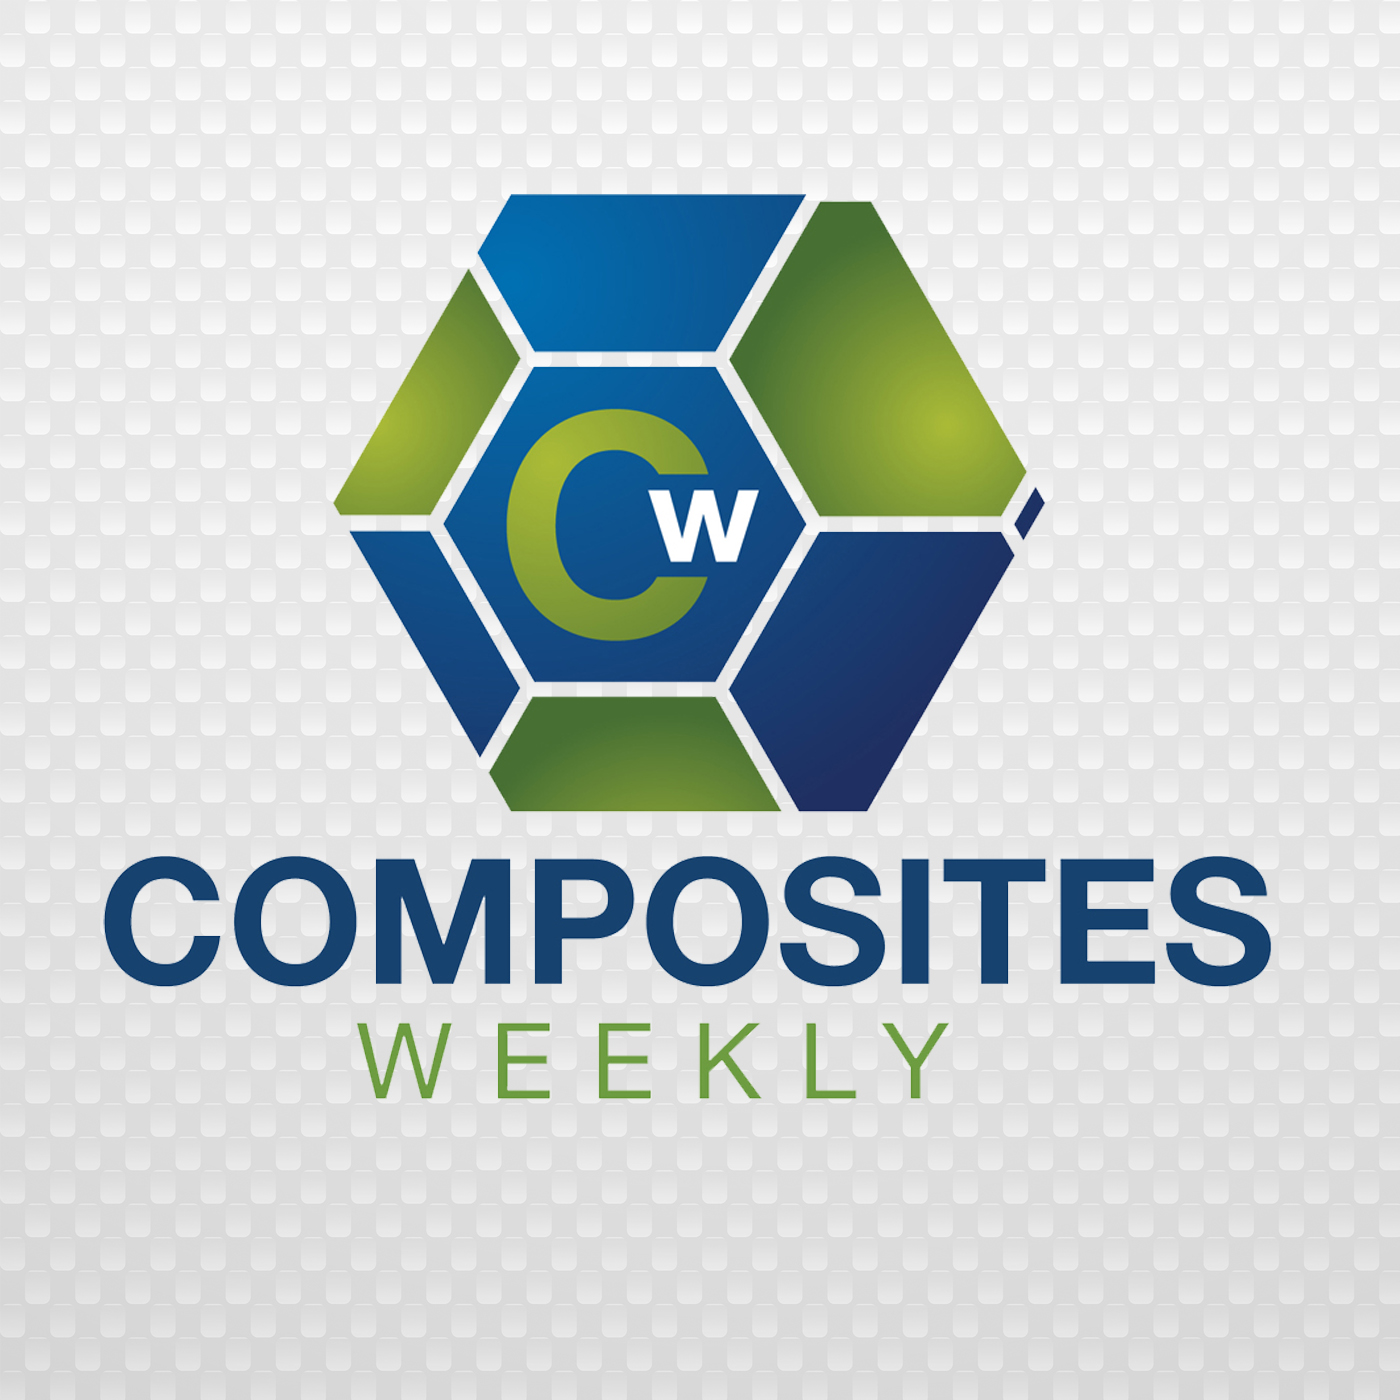 Composites Weekly